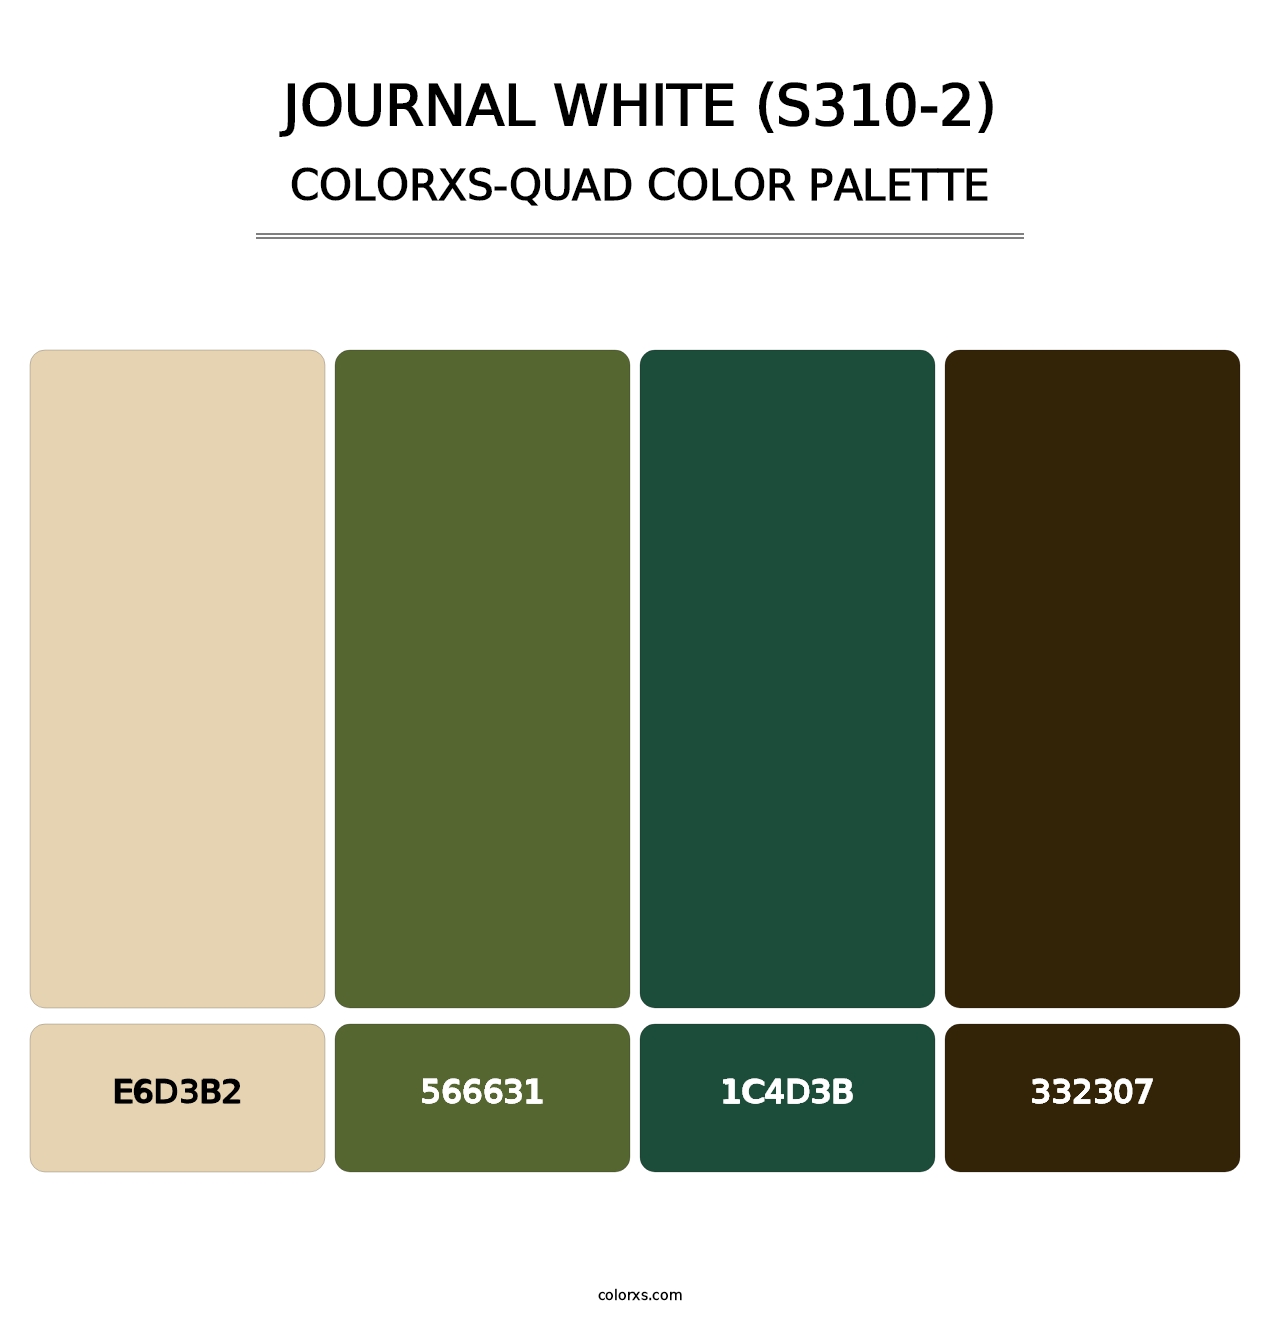 Journal White (S310-2) - Colorxs Quad Palette